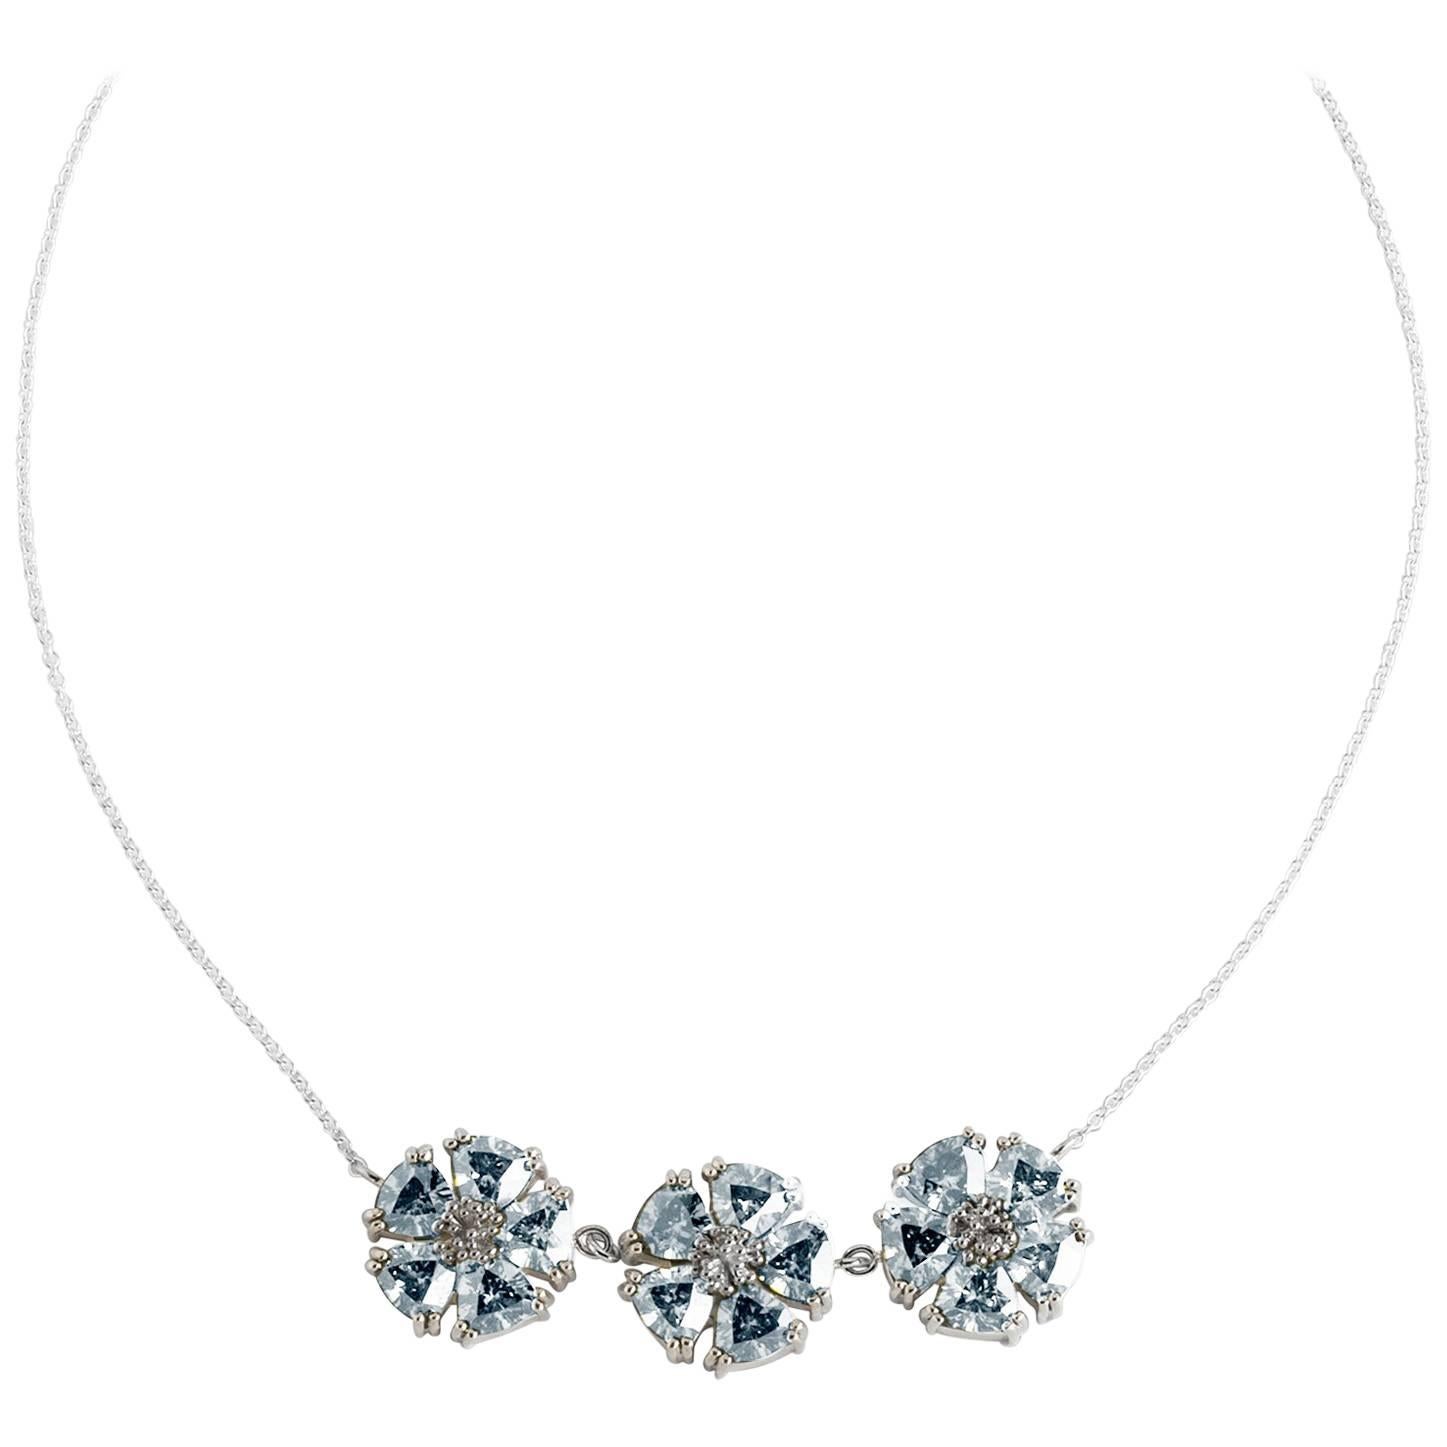 Light Blue Sapphire 123 Blossom Stone Necklace For Sale